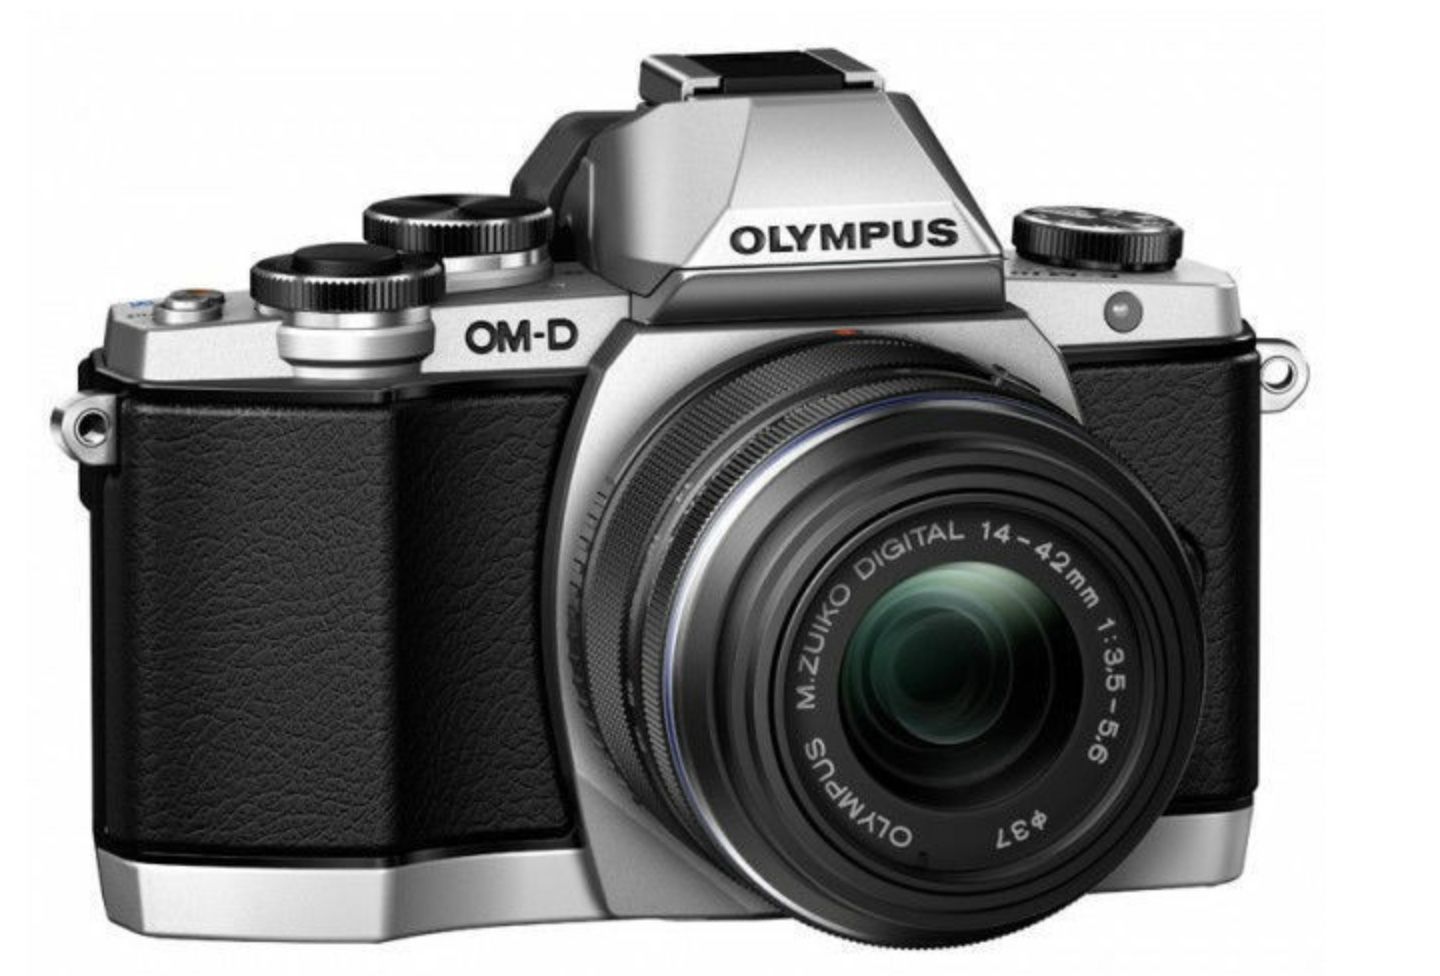 Olympus OM-D E-M10 16.0 MP Digital Camera -Silver with 45mm Lens & 14-42mm Lens